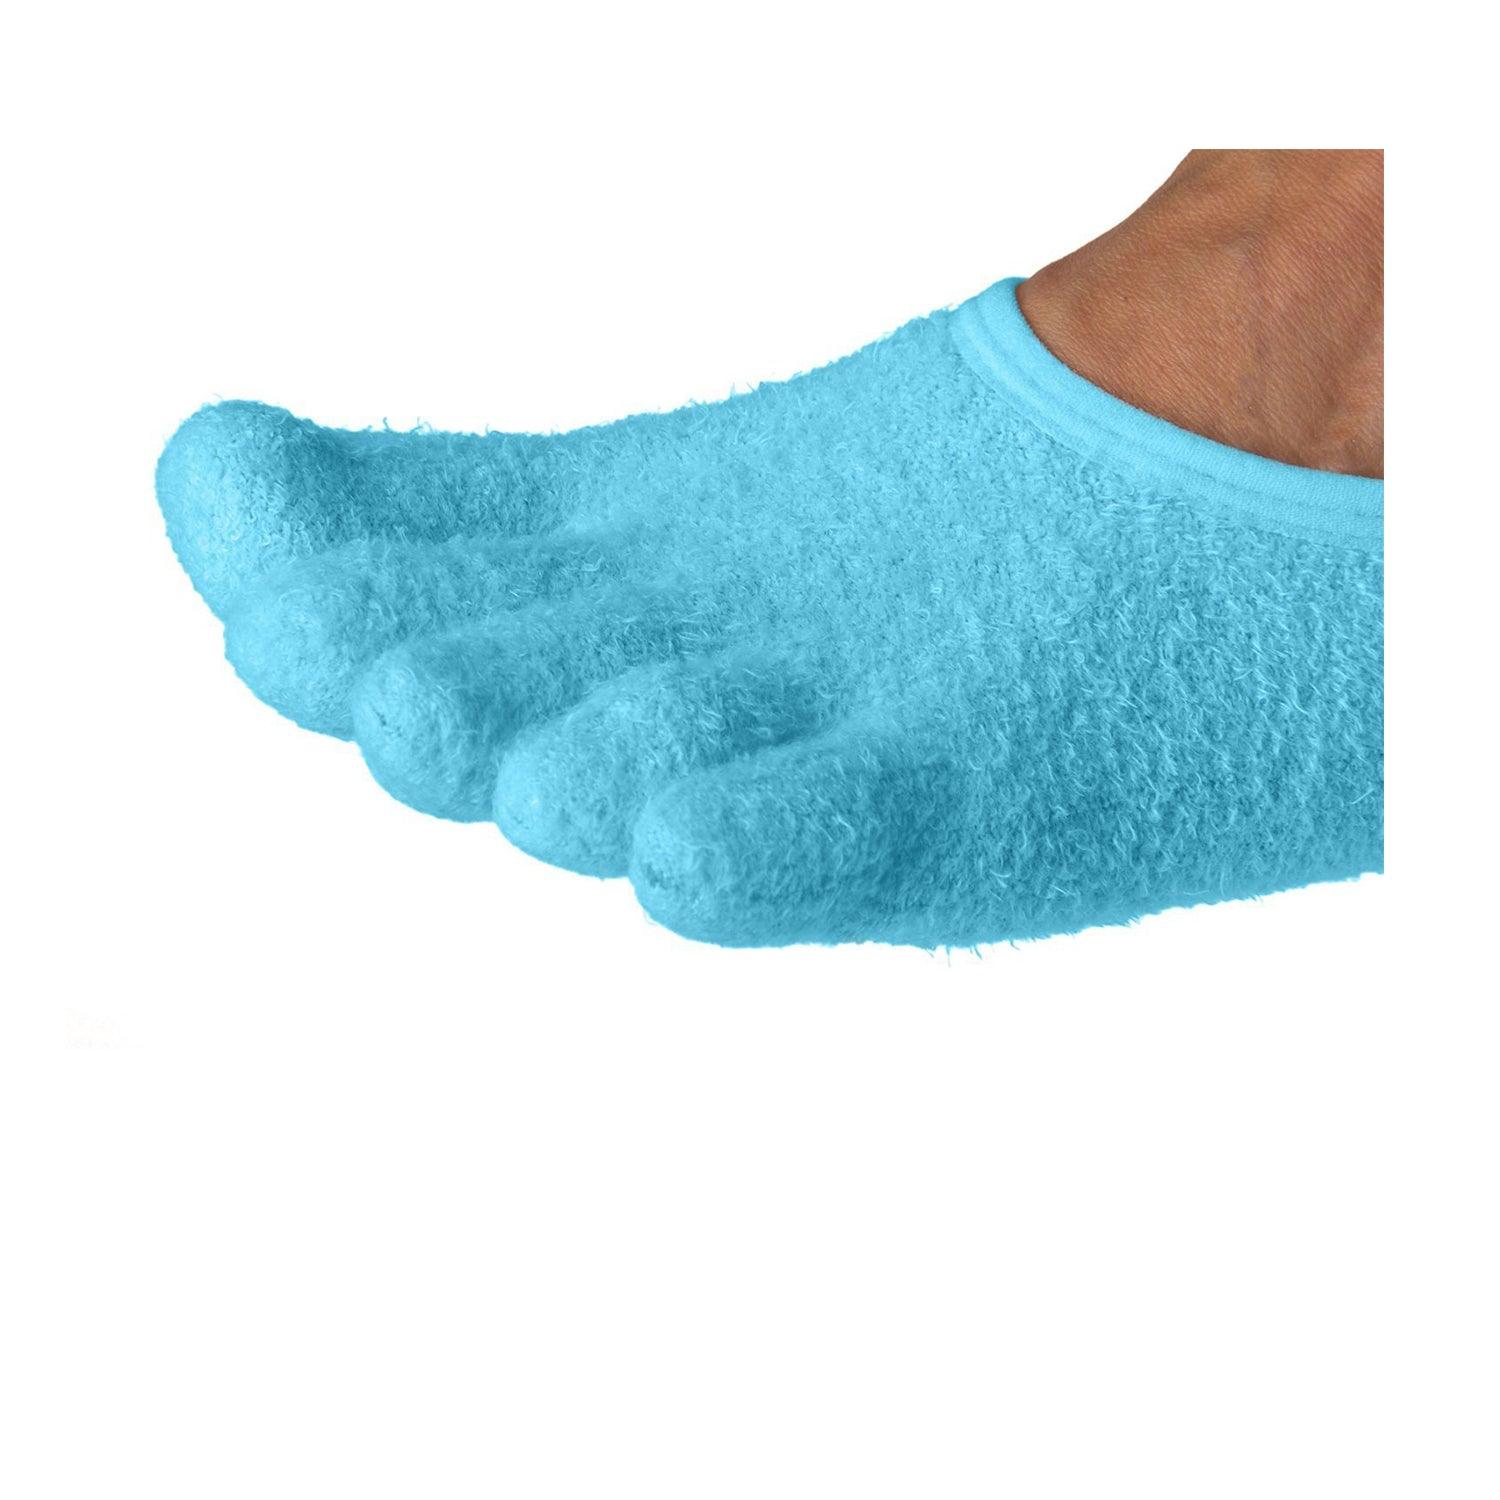 Shoppers Say These $14 Moisturizing Socks Heal Dry Feet